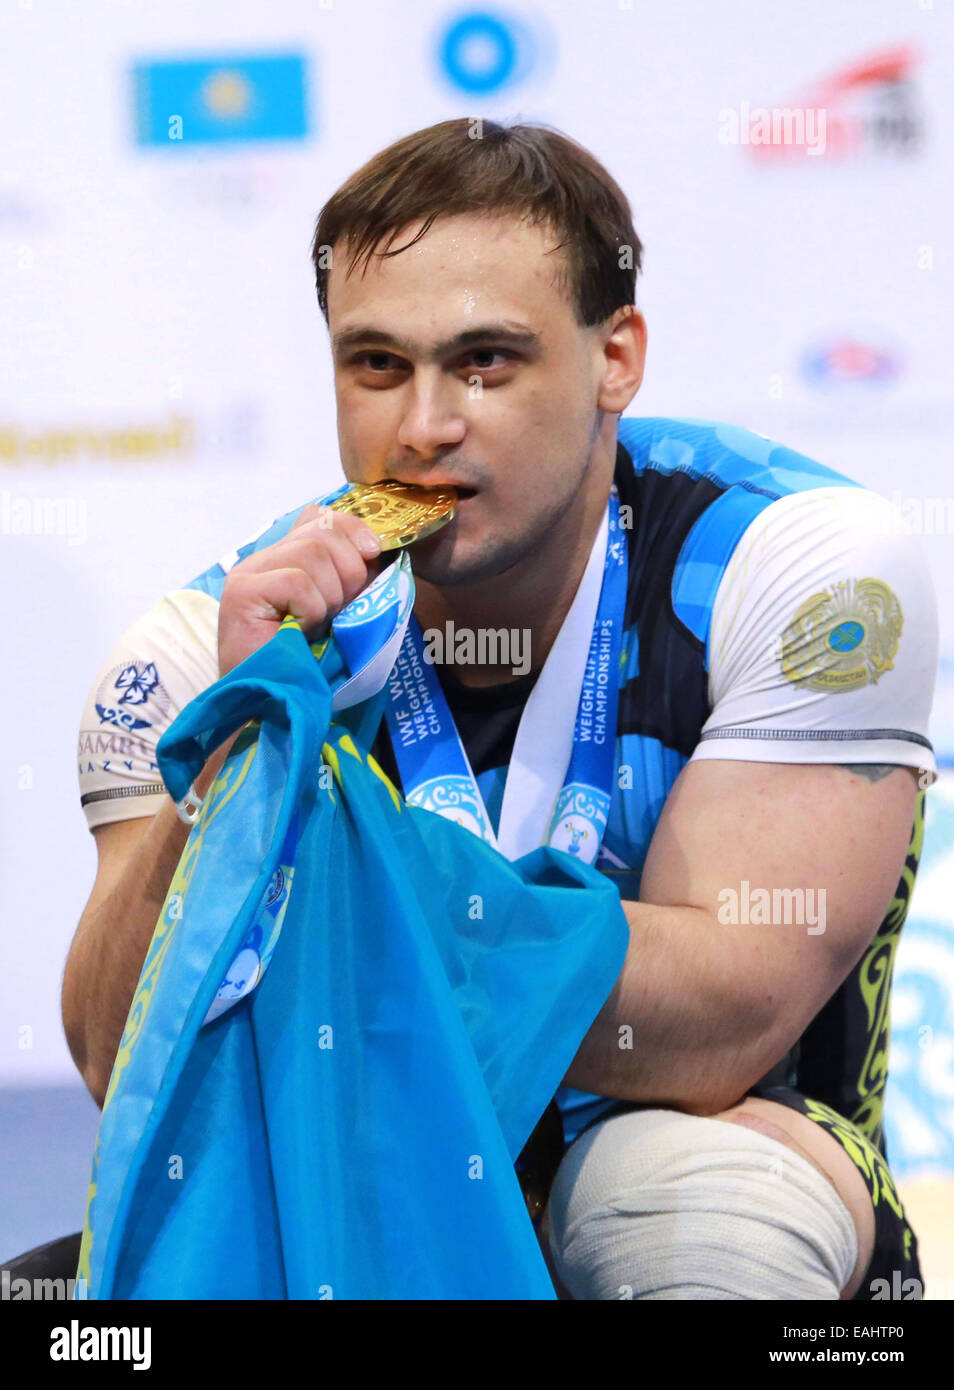 Almaty. 16th Nov, 2014. Kazakhstan's Ilya Ilyin poses with his gold ...